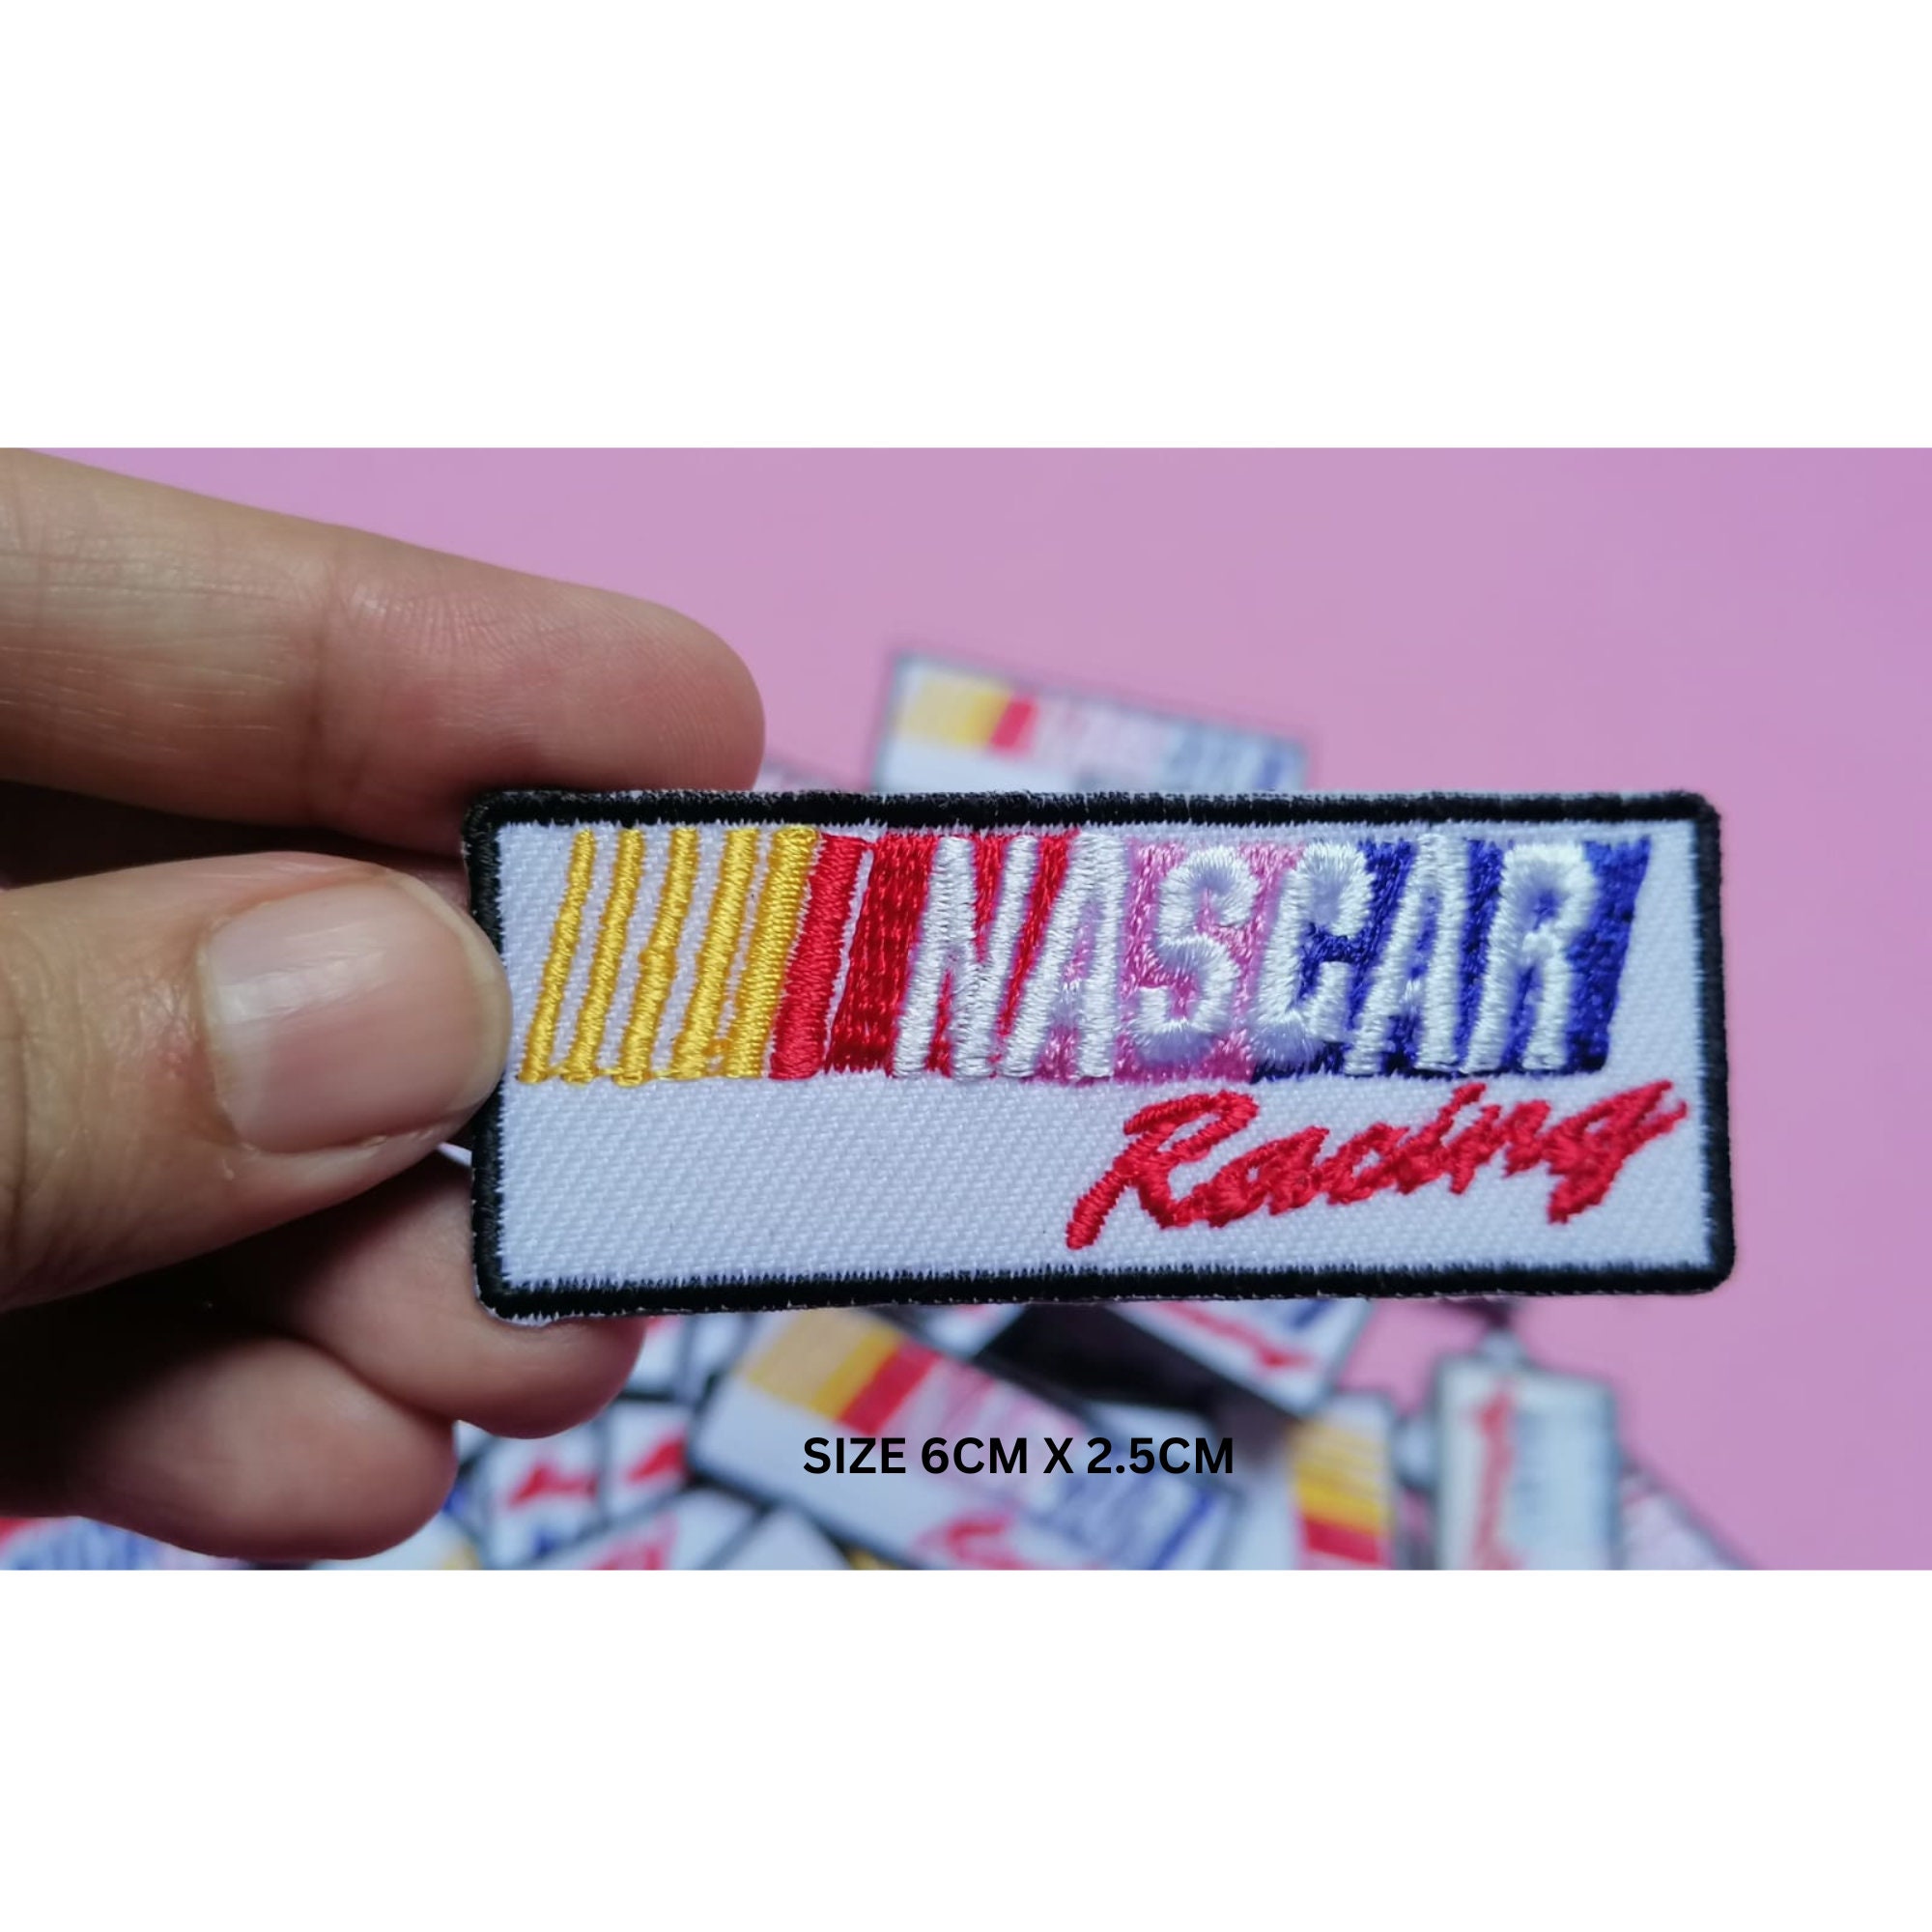 Nascar racing badge for sale  